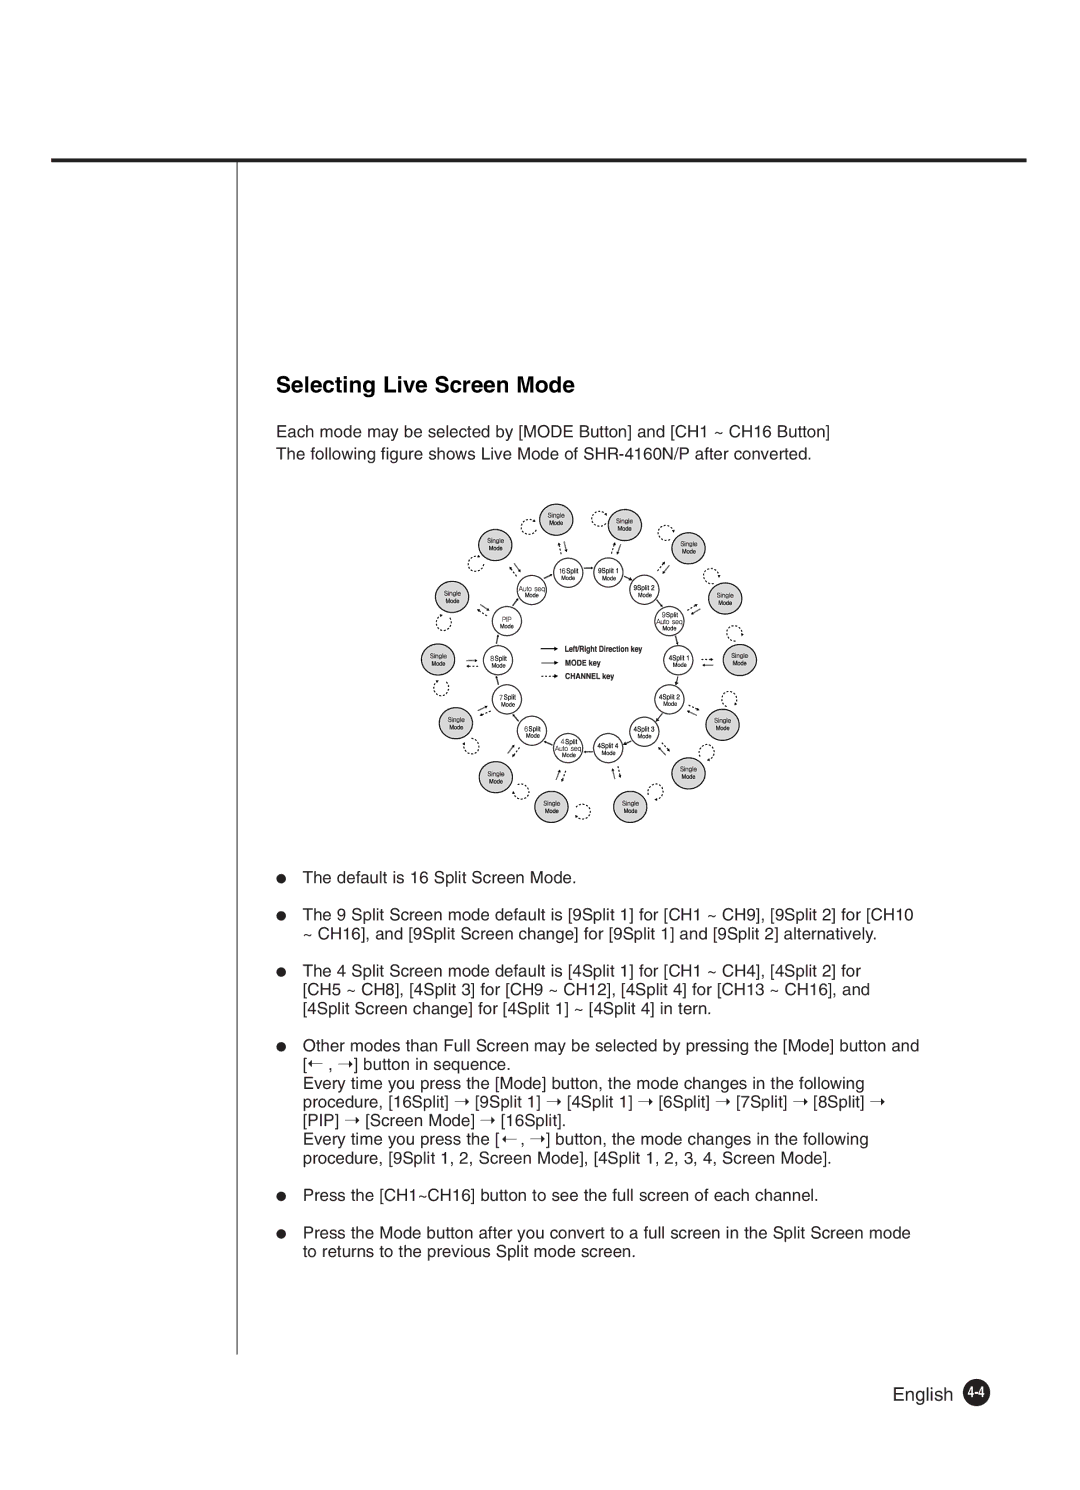 Samsung SHR-4160P manual Selecting Live Screen Mode 